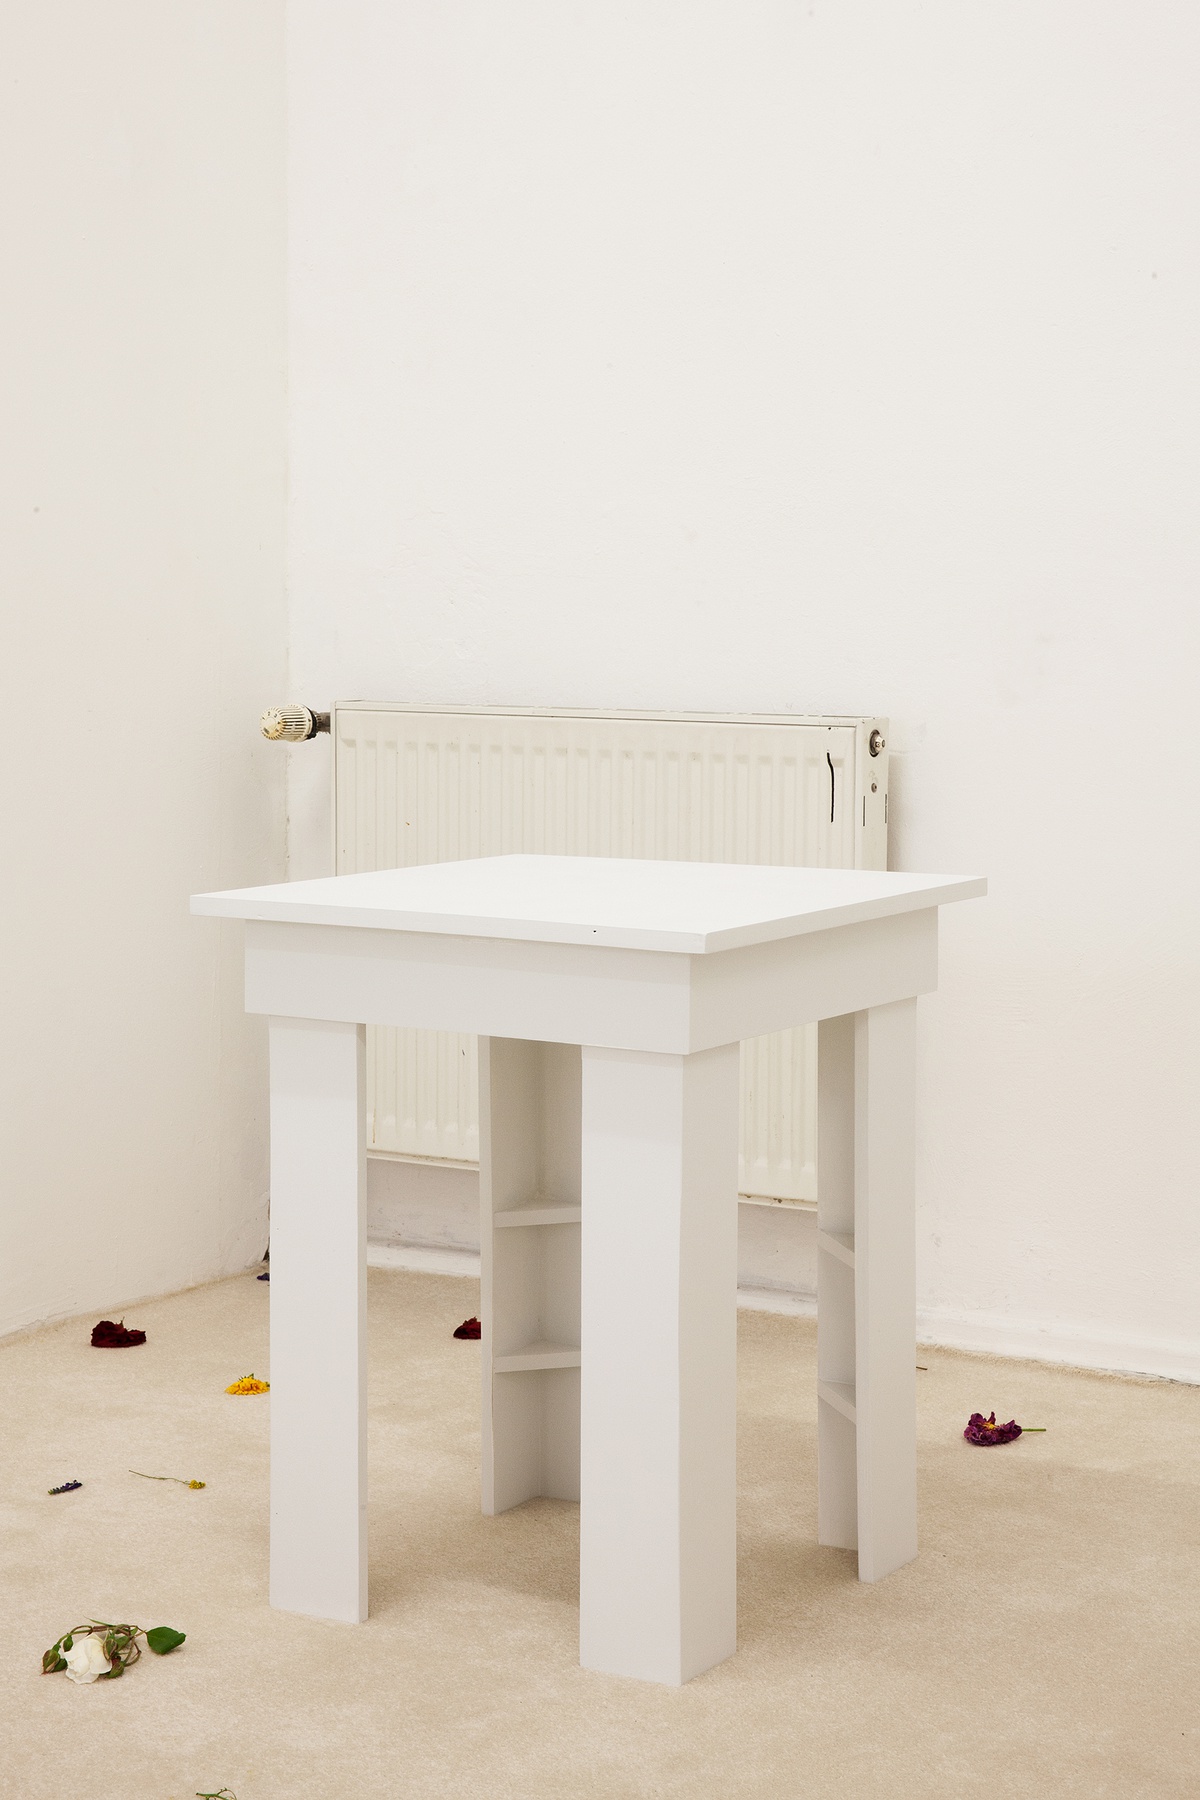 Angharad Williams, Untitled, 2020Plywood, eggshell55 x 55 x 67 cm